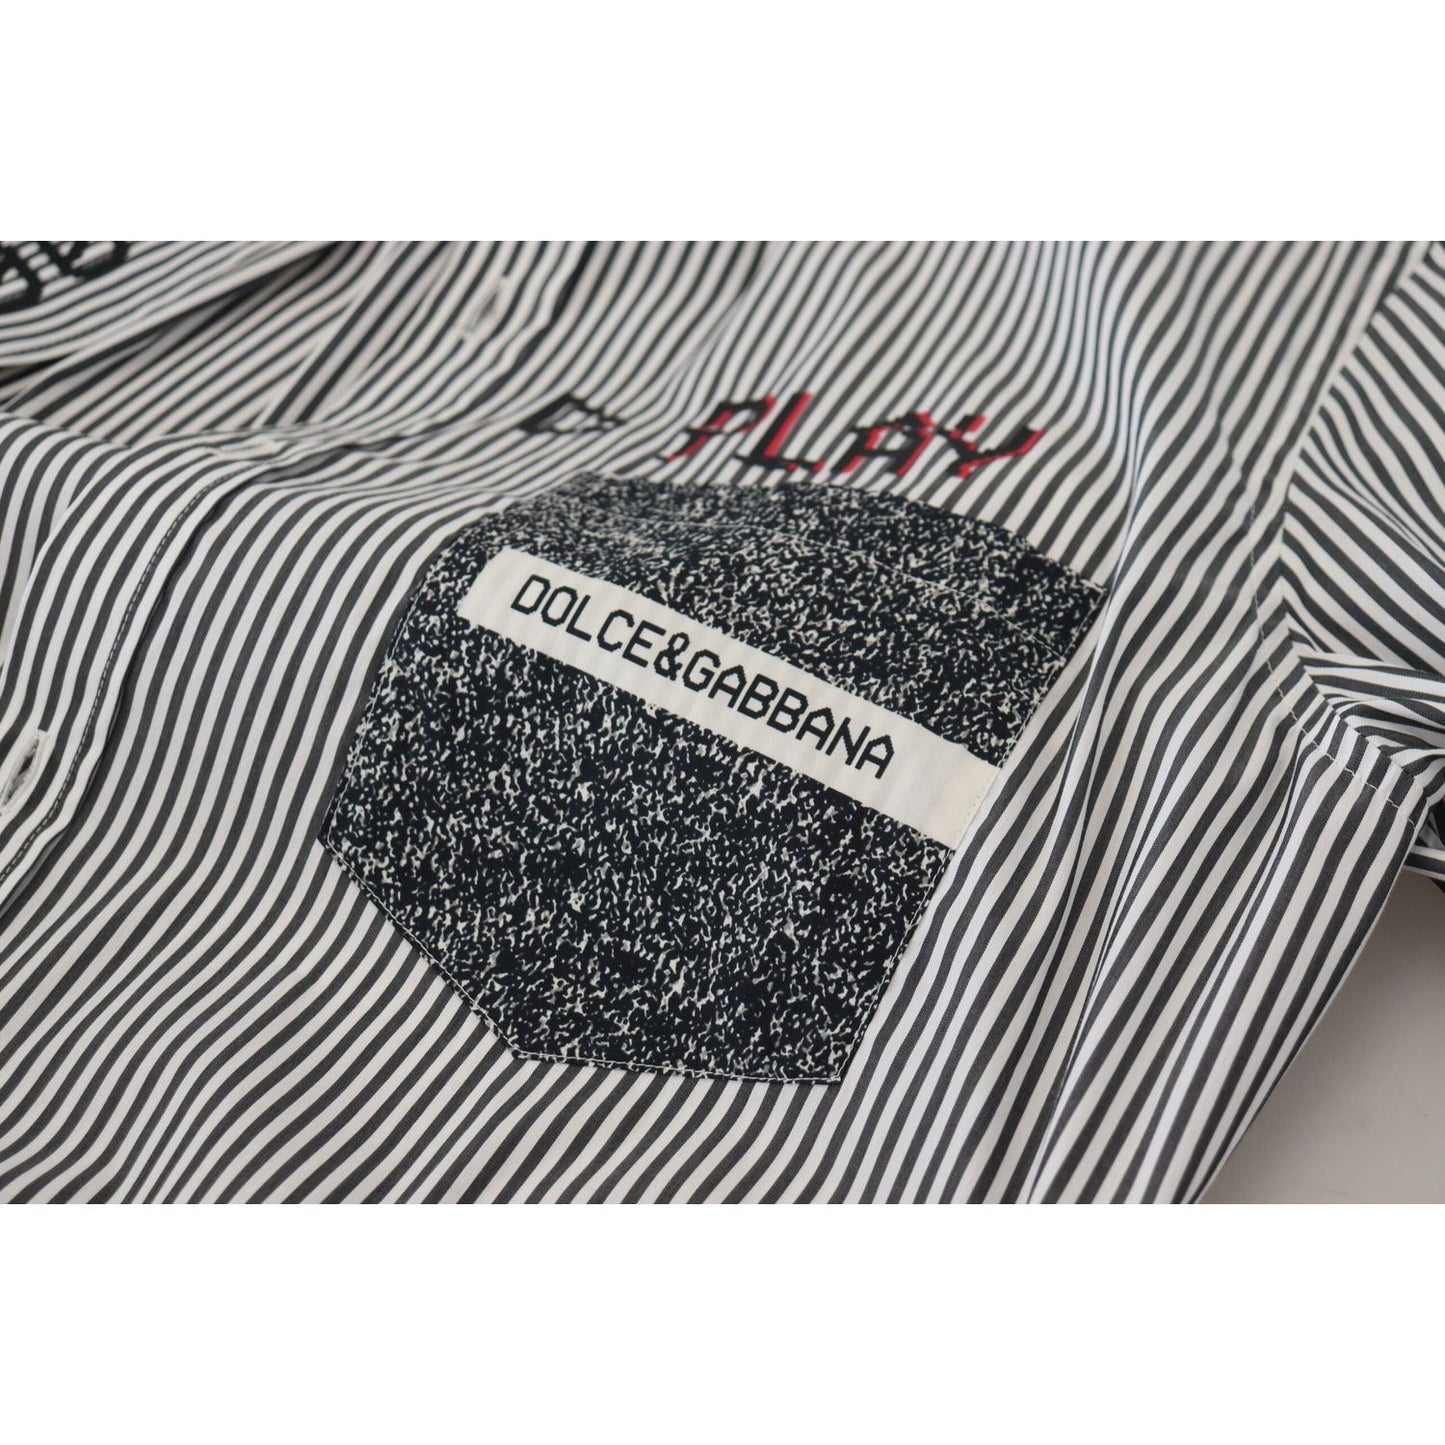 Dolce & Gabbana Classic Black and White Striped Button-Down Shirt black-white-striped-printed-casual-cotton-shirt